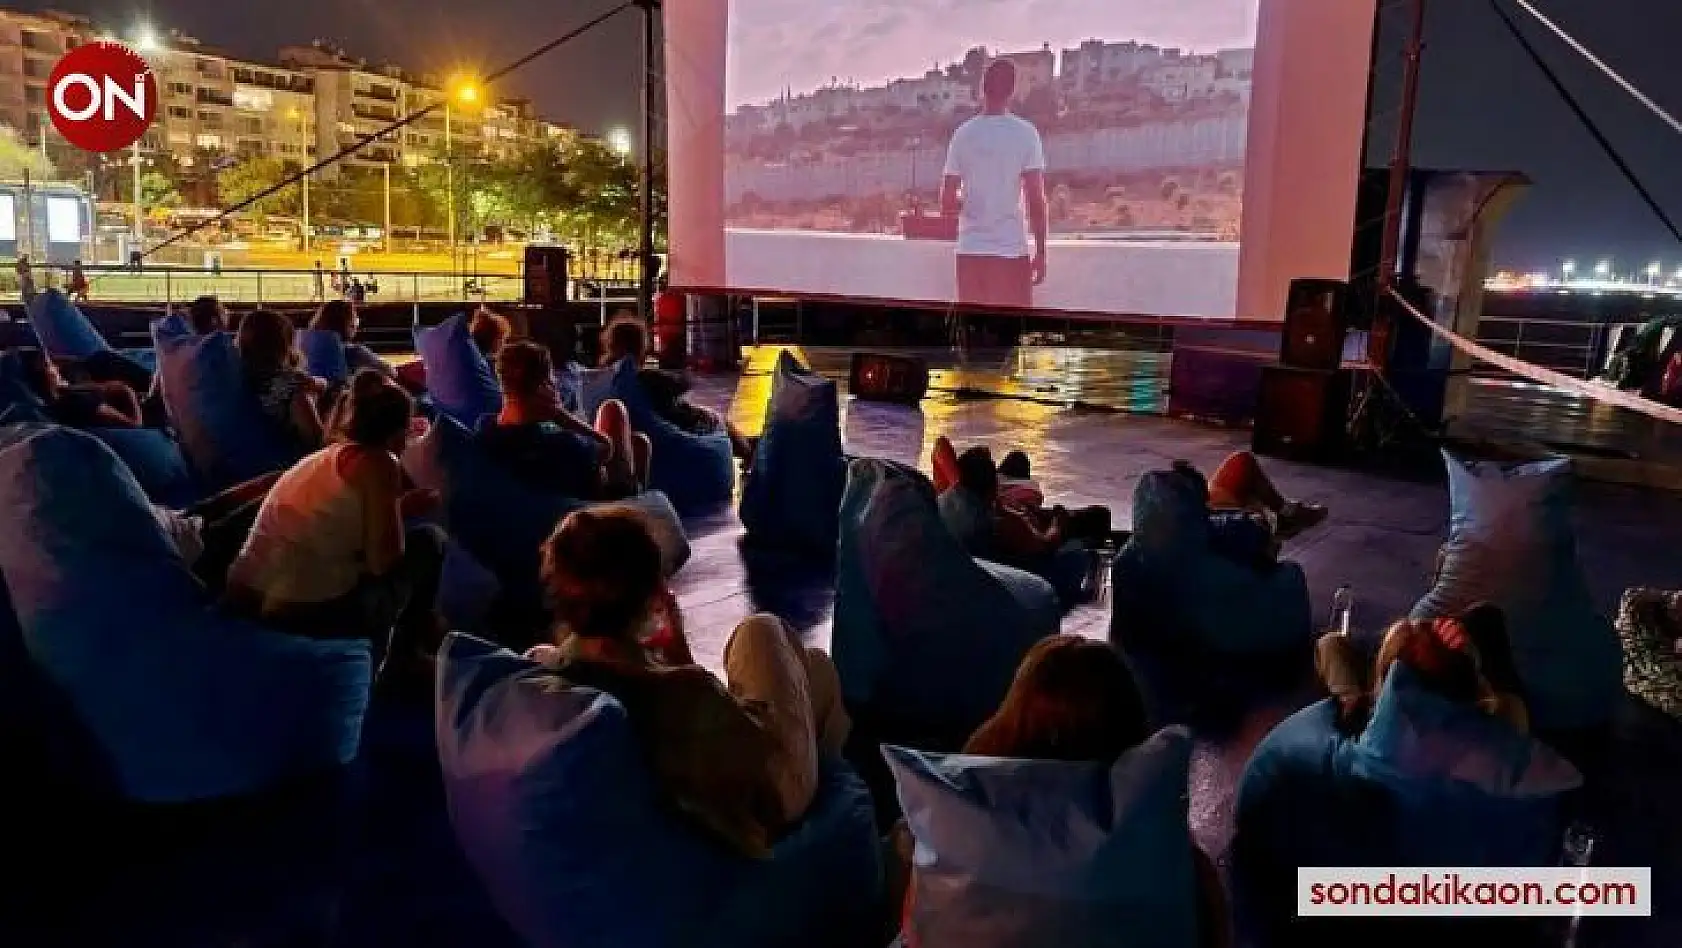 İzmirliler denizde sinemayı sevdi